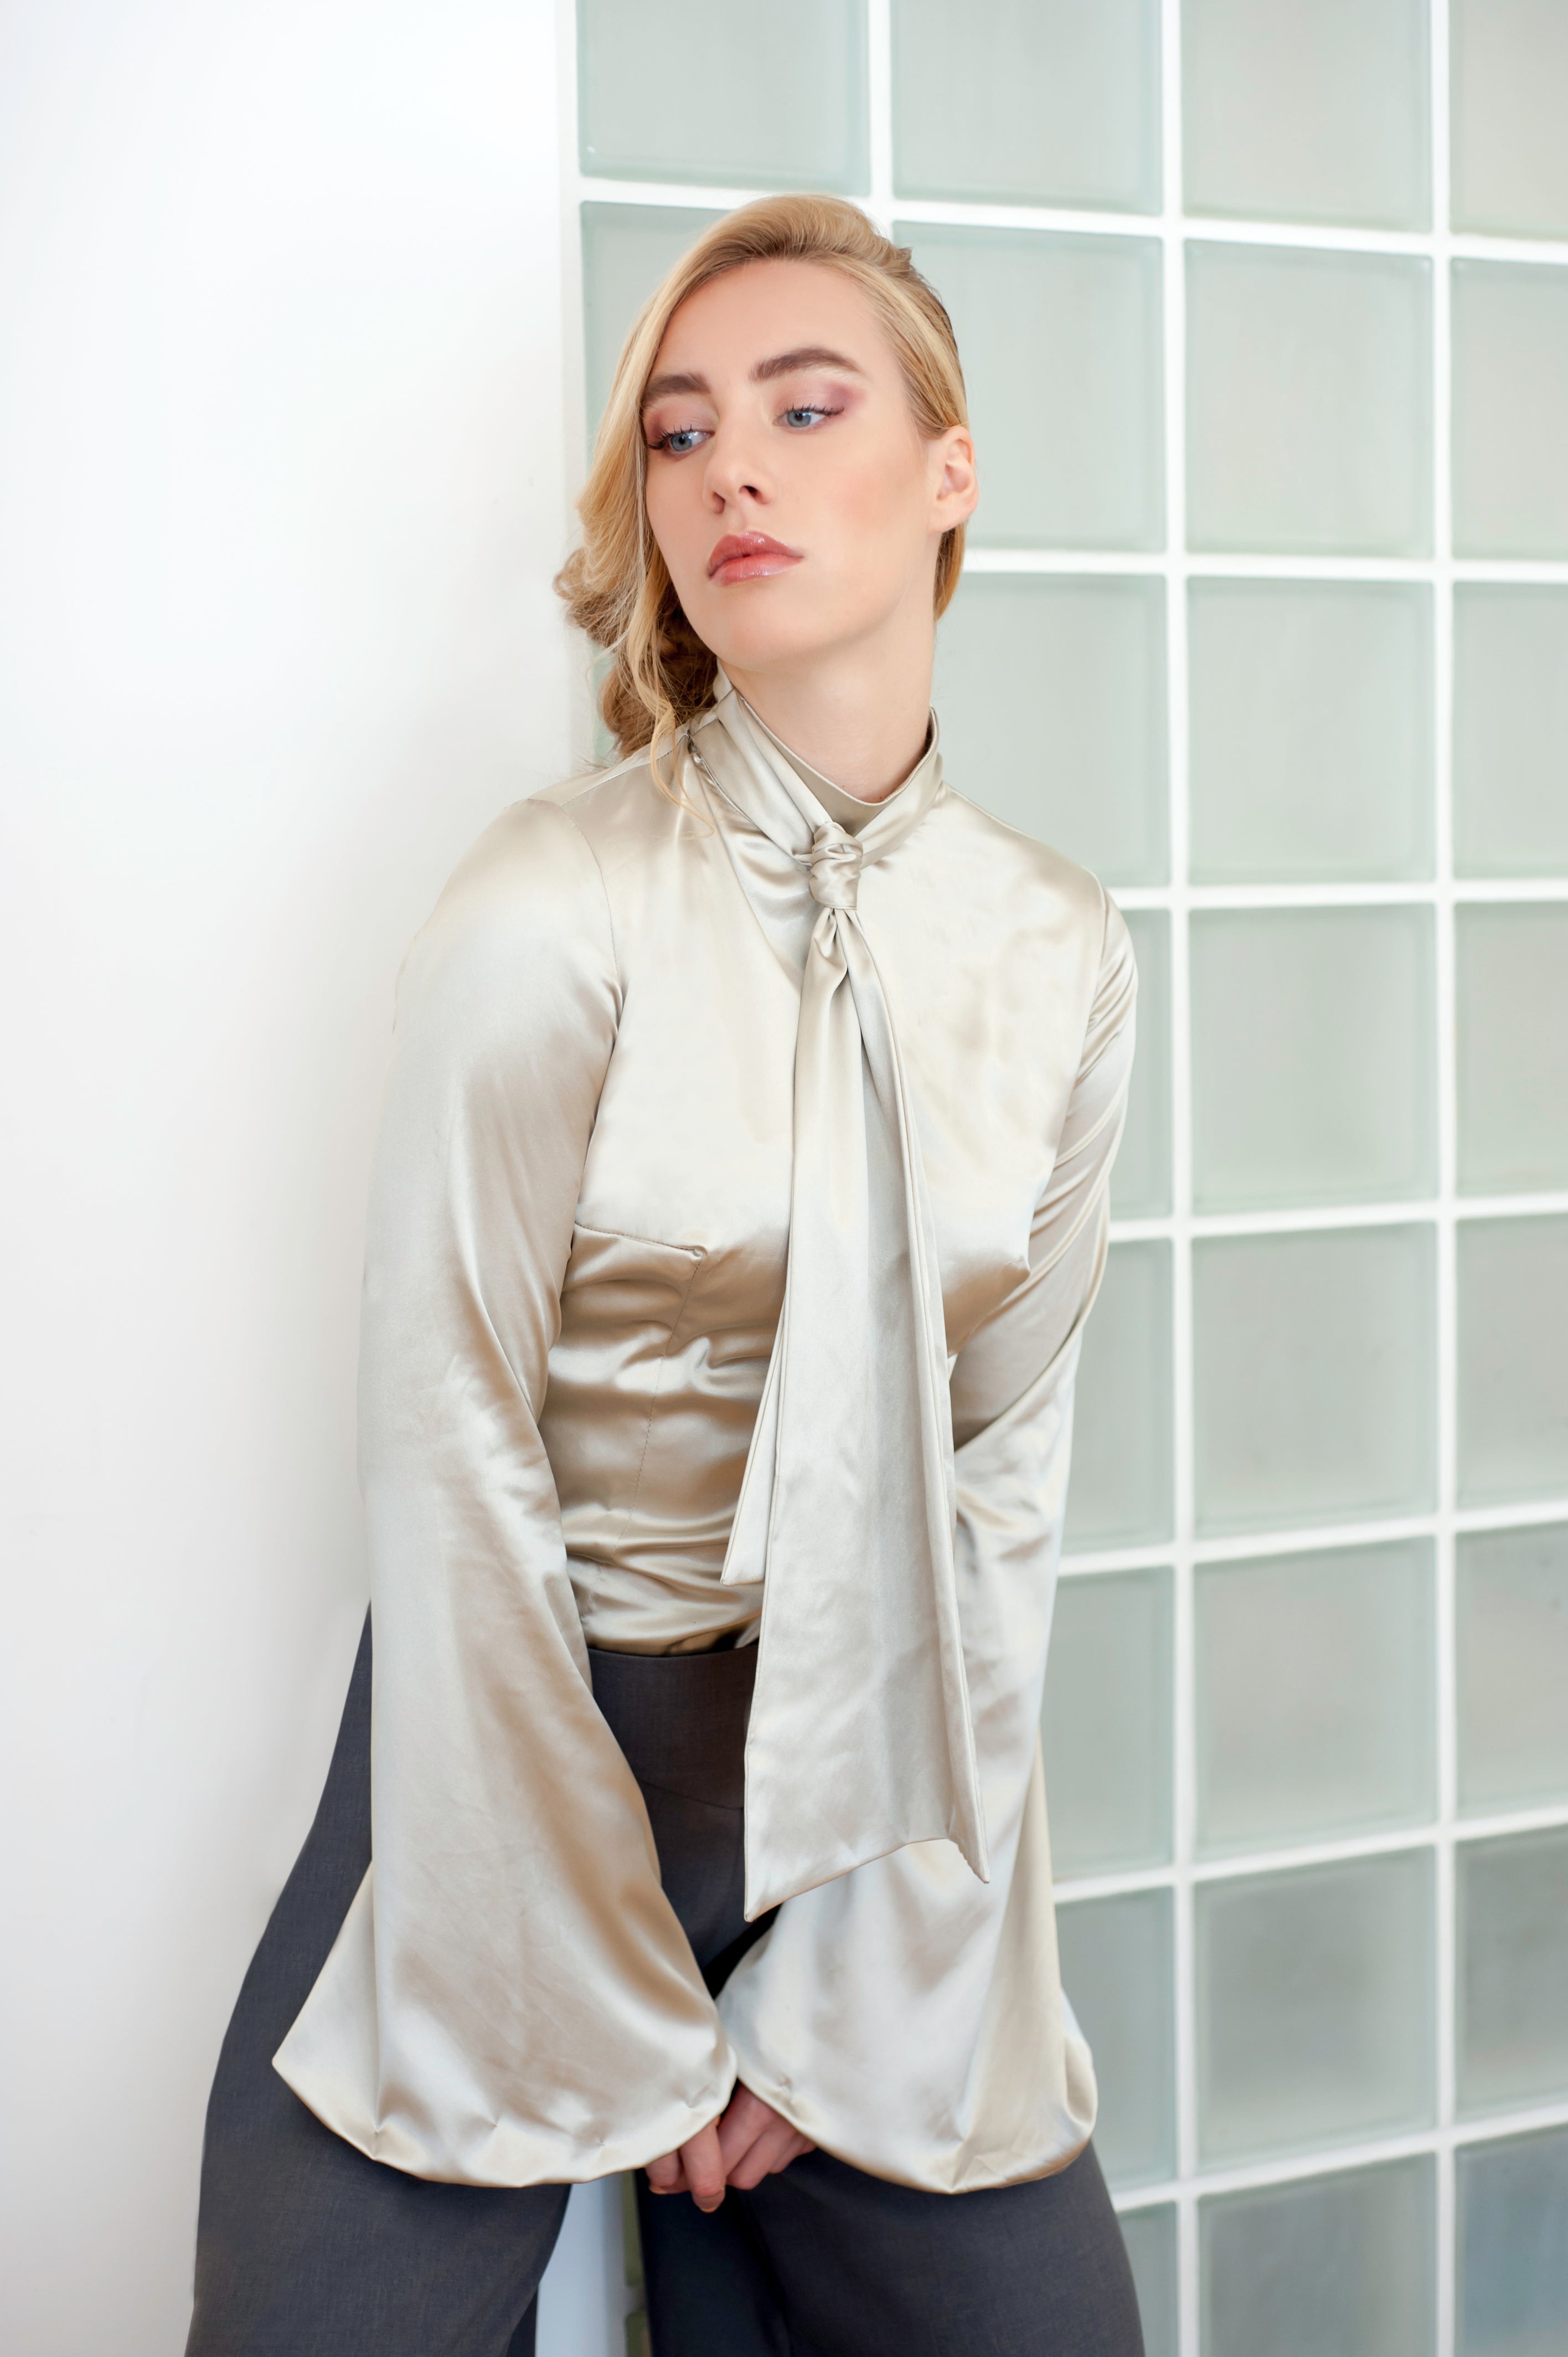 Georgette blouse - VeRaf Clothing